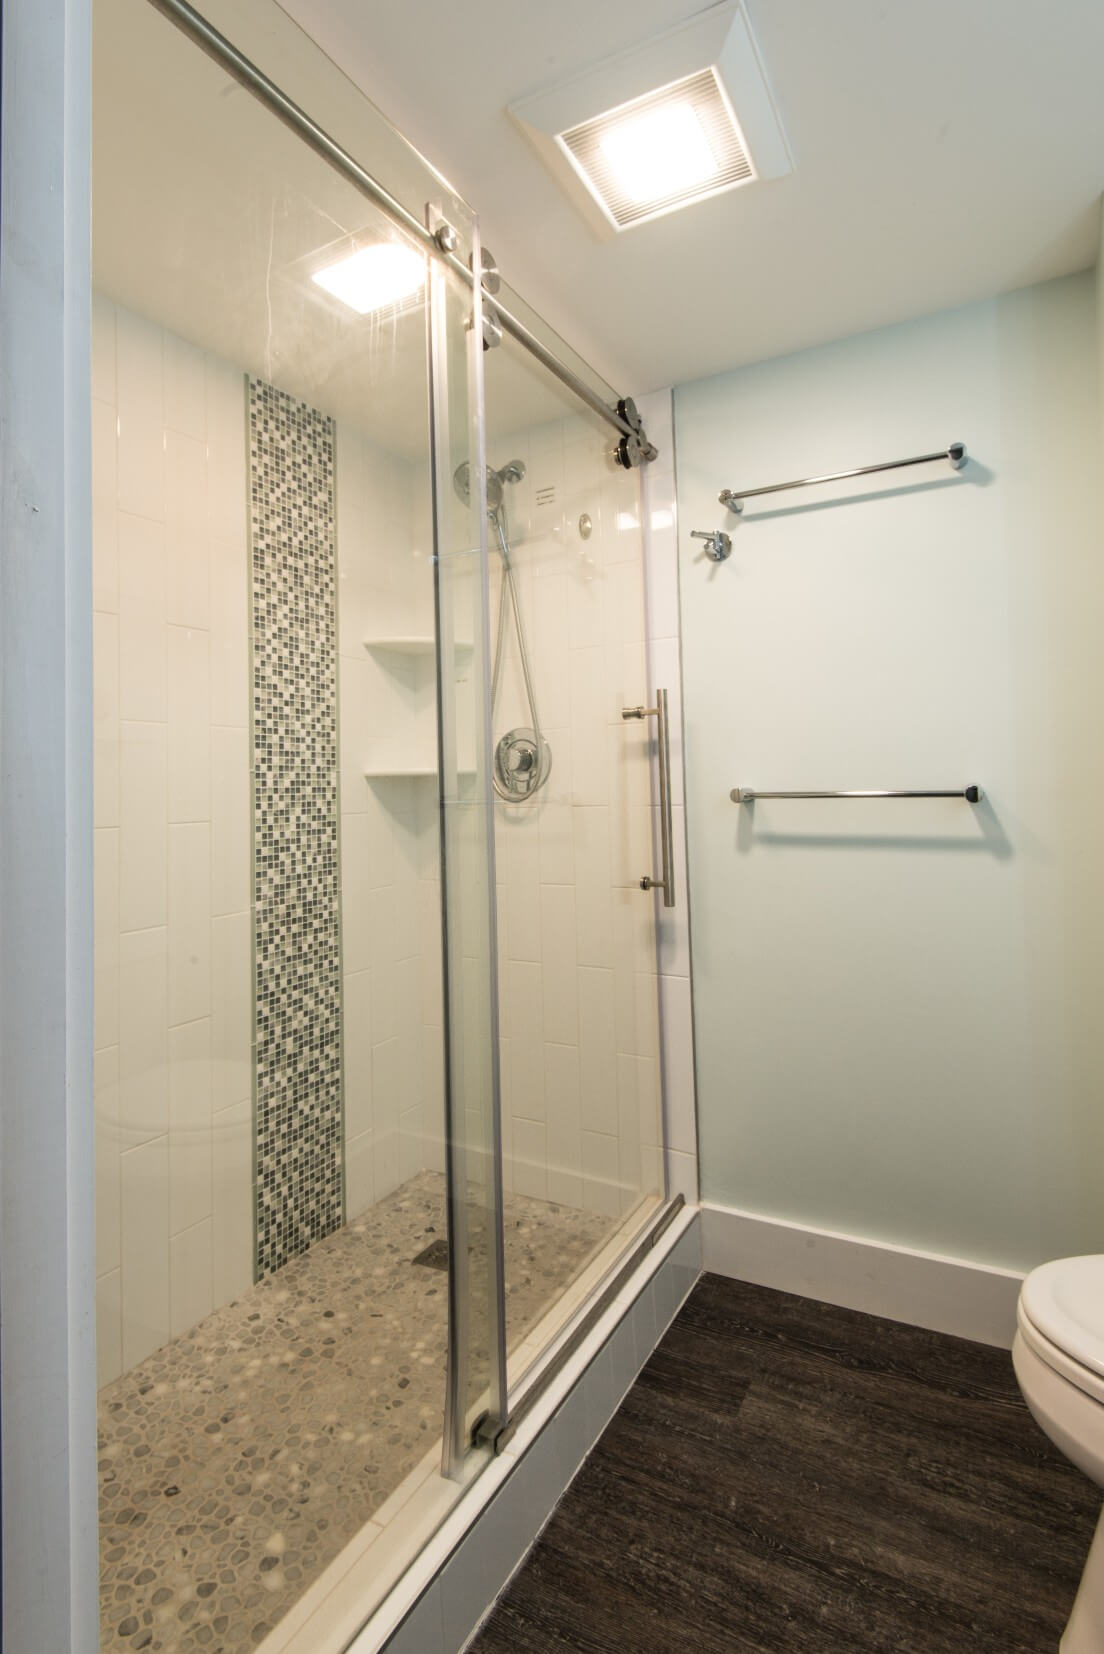 Sea Colony Condo Renovation Vol.2 Bethany Beach, DE Bathroom with Mosaic Shower Floor and Sliding Frameless Glass Shower Door